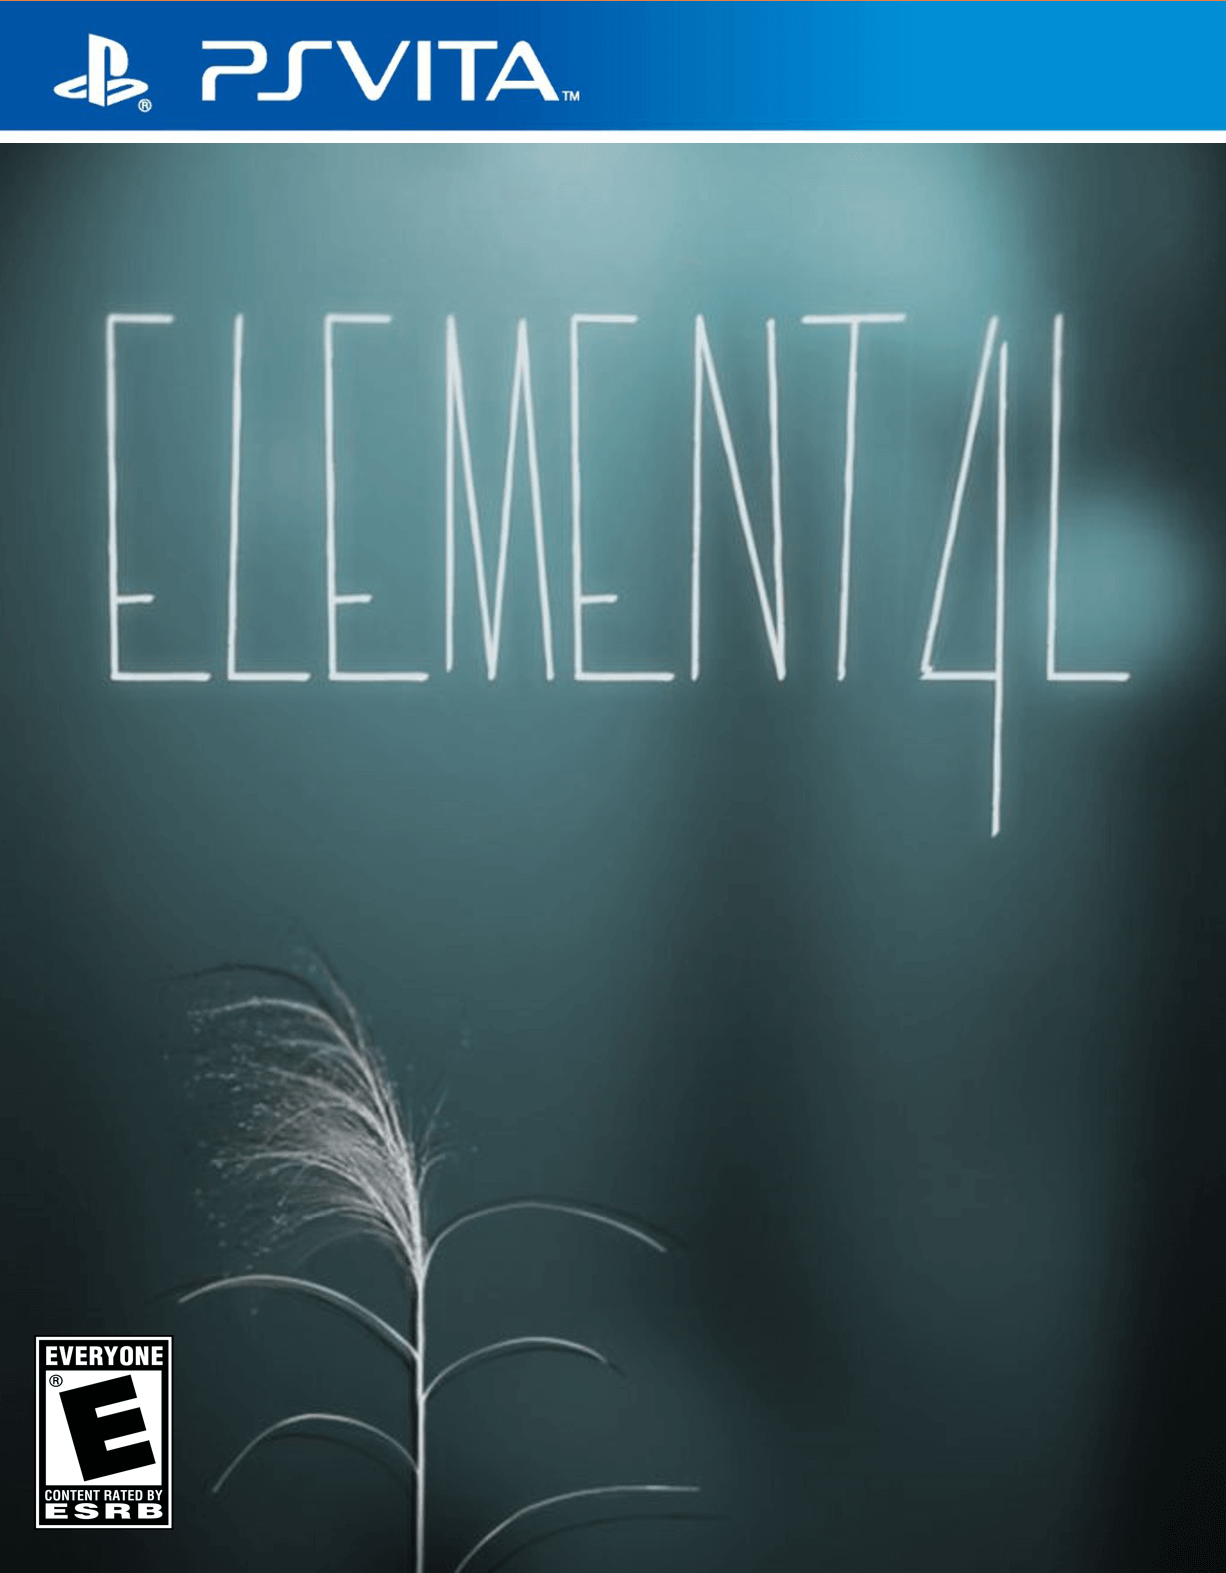 Element4l